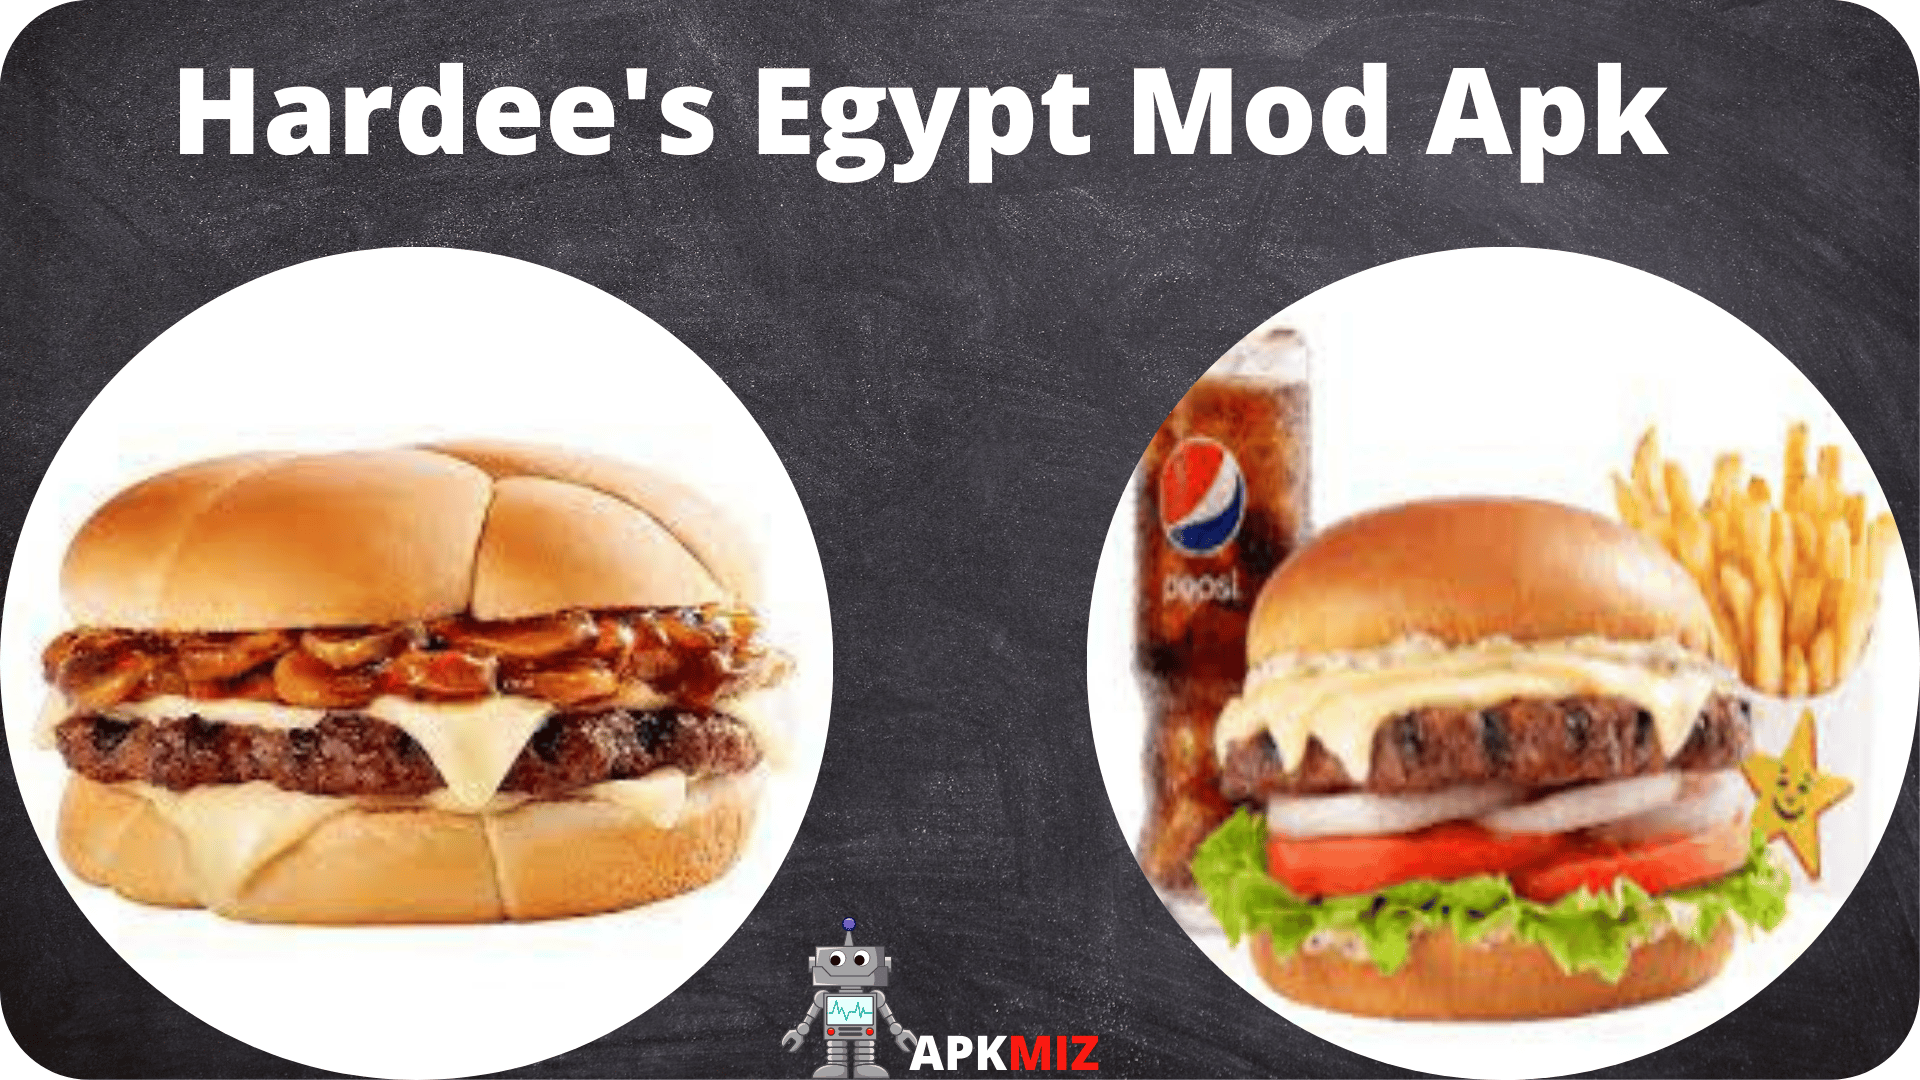 Hardee's Egypt Mod Apk